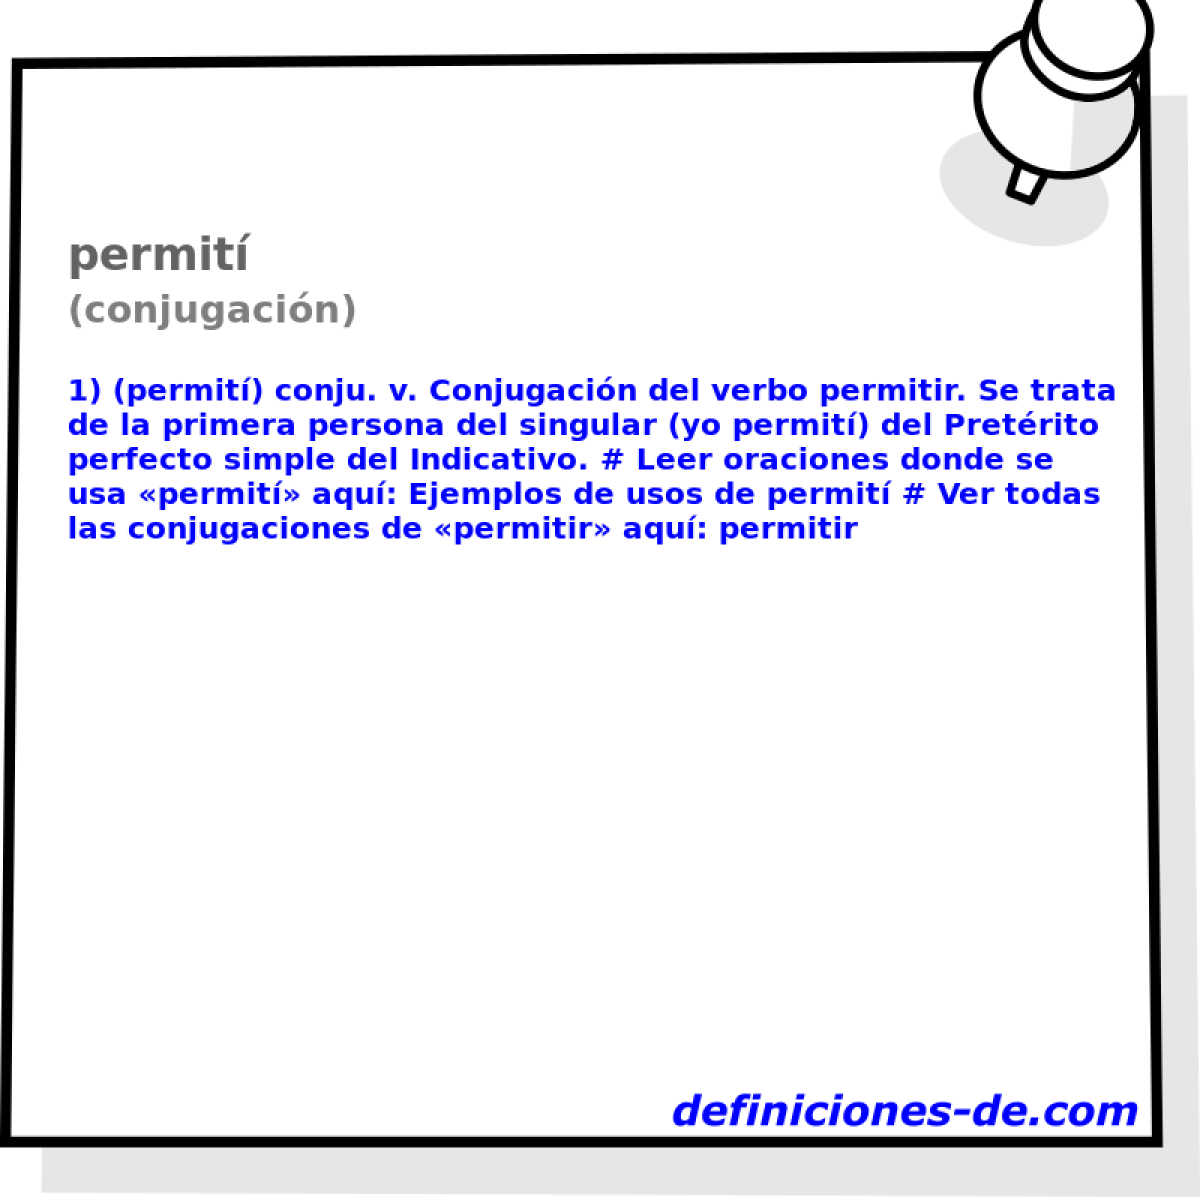 permit (conjugacin)